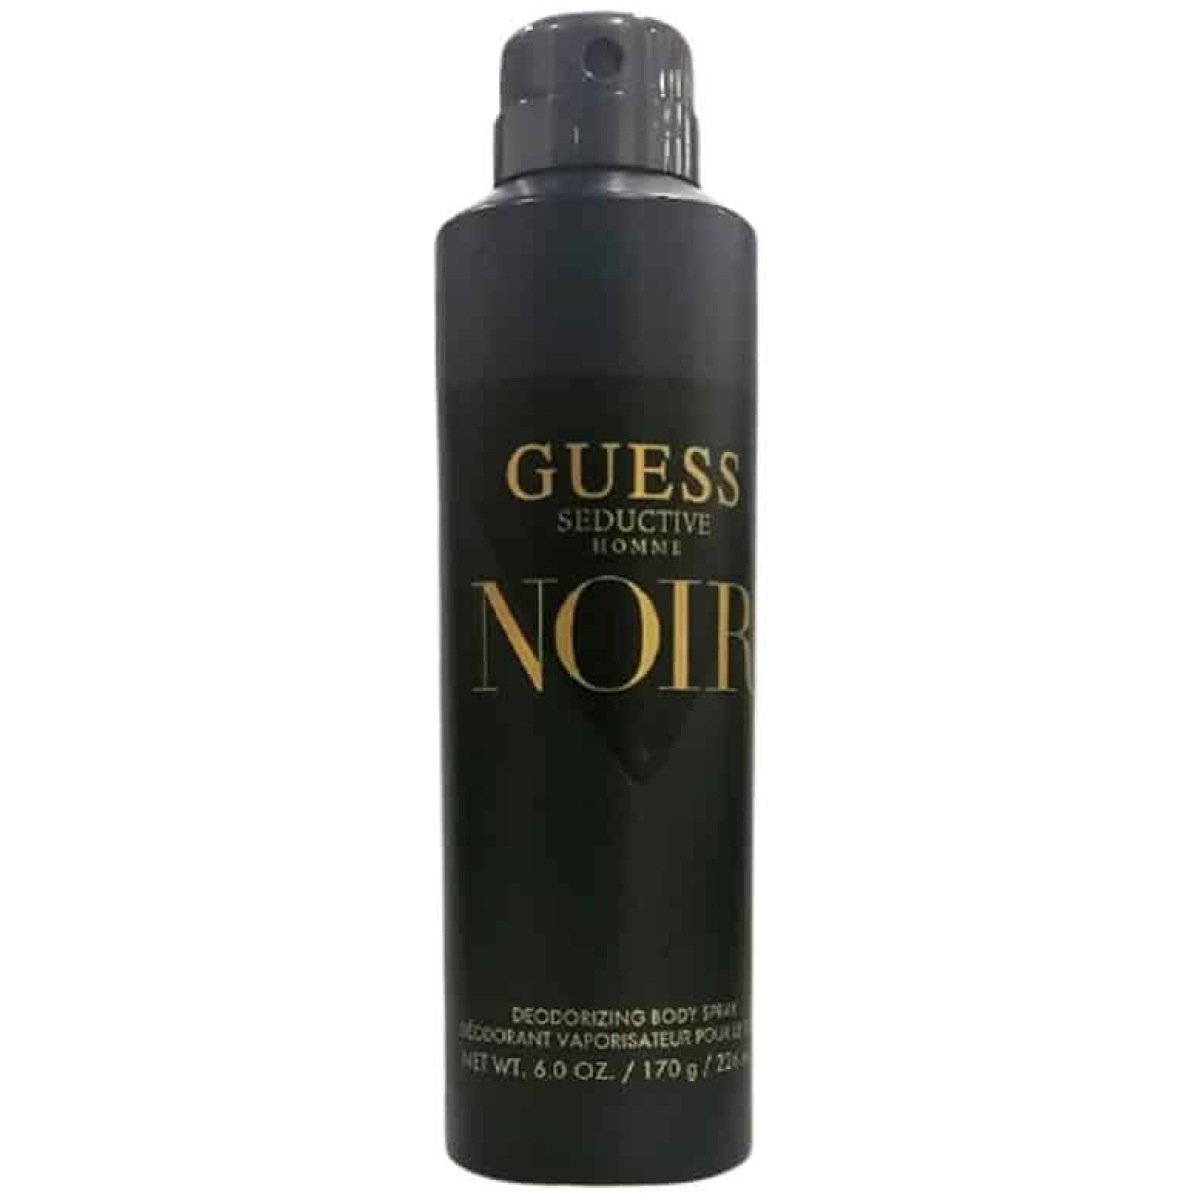 Guess Seductive Homme Noir Deodorant Body Spray 226 ml